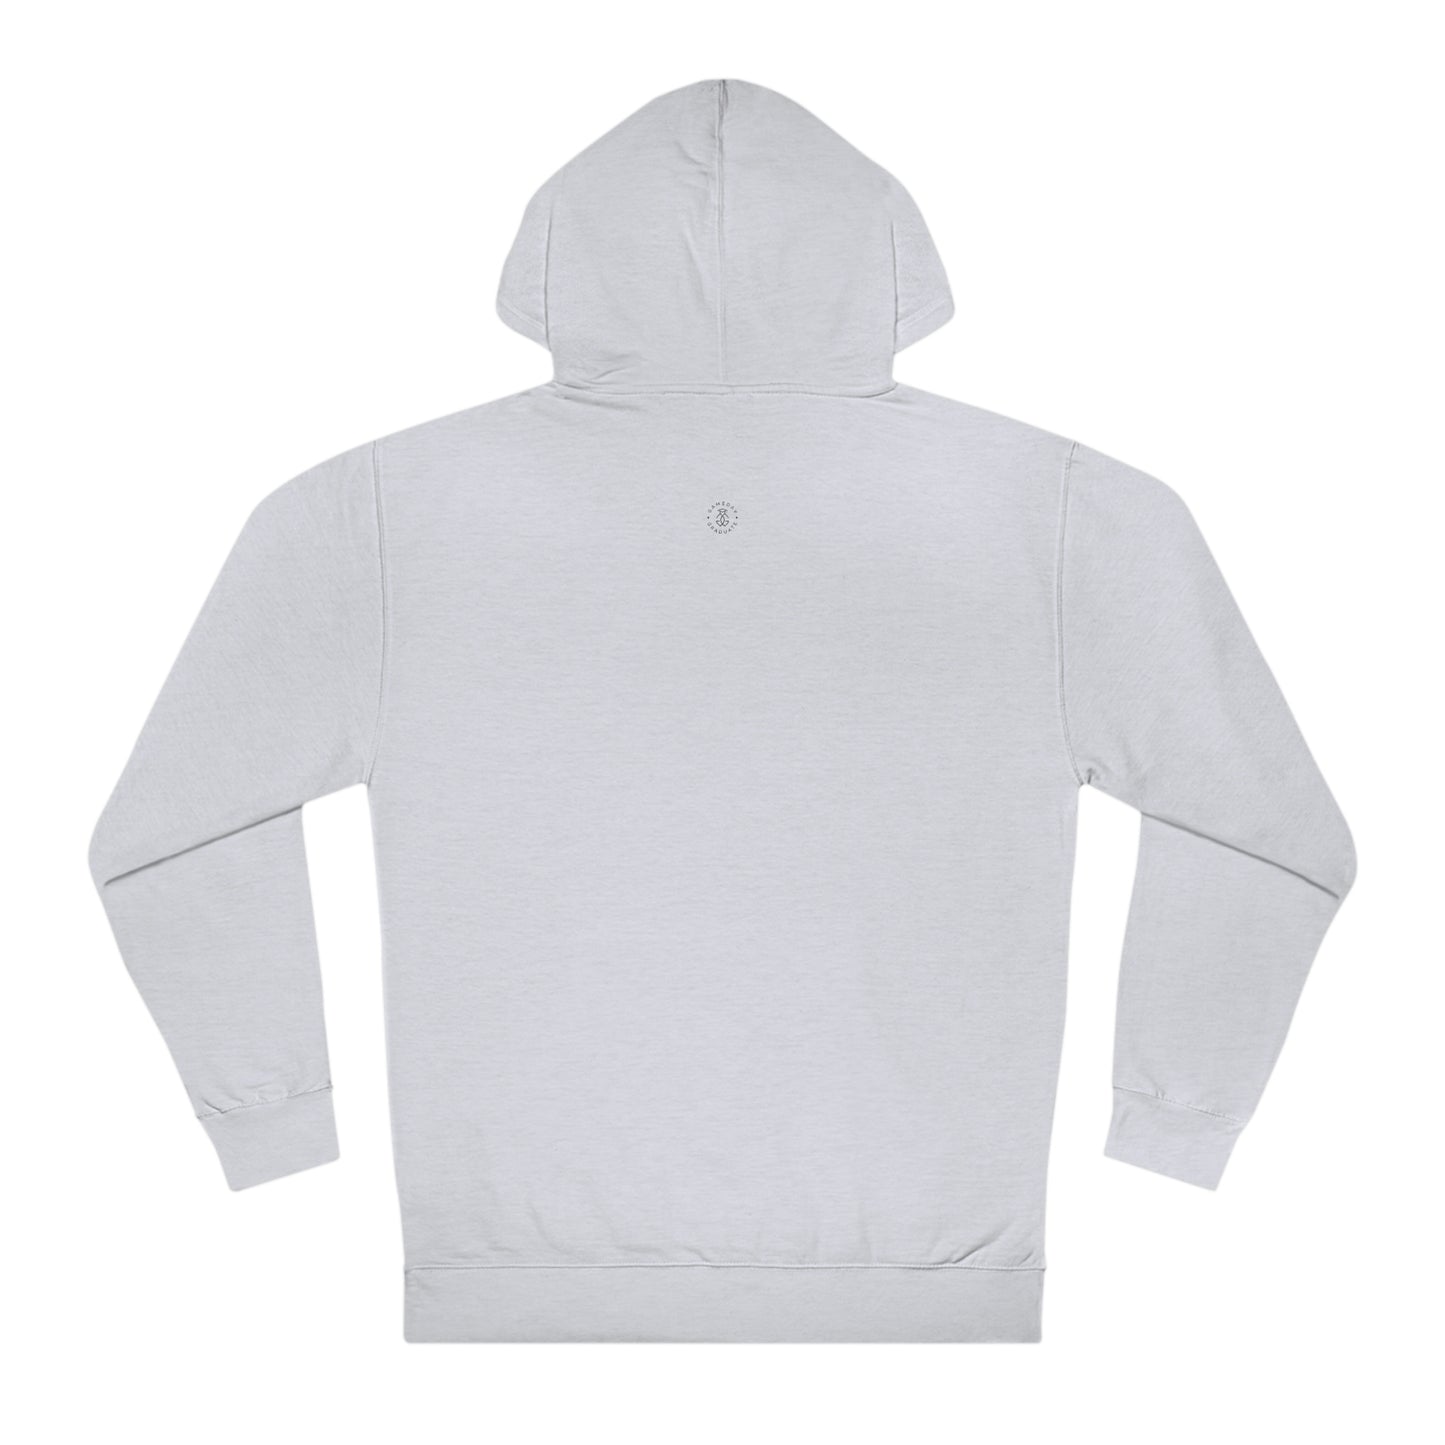 VA Tech Hooded Sweatshirt - GG